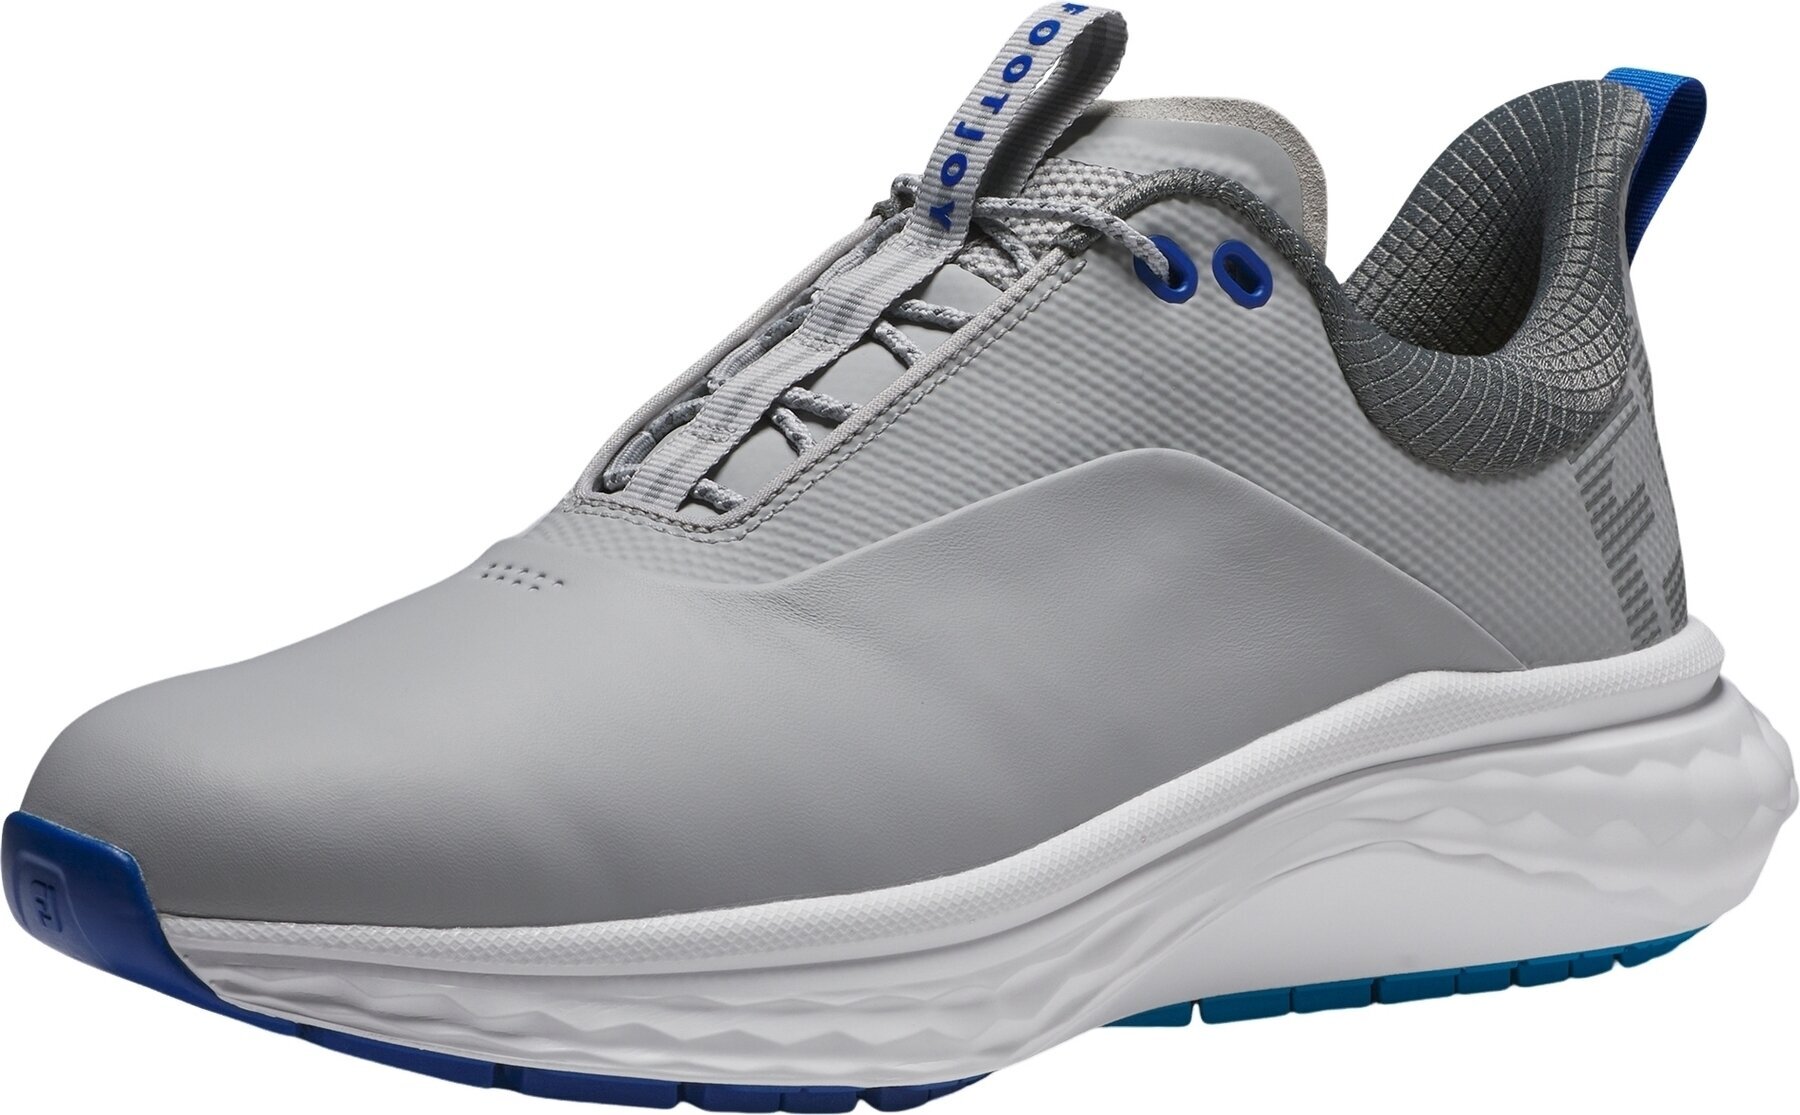 Footjoy Quantum Mens Golf Shoes Grey/White/Blue 44